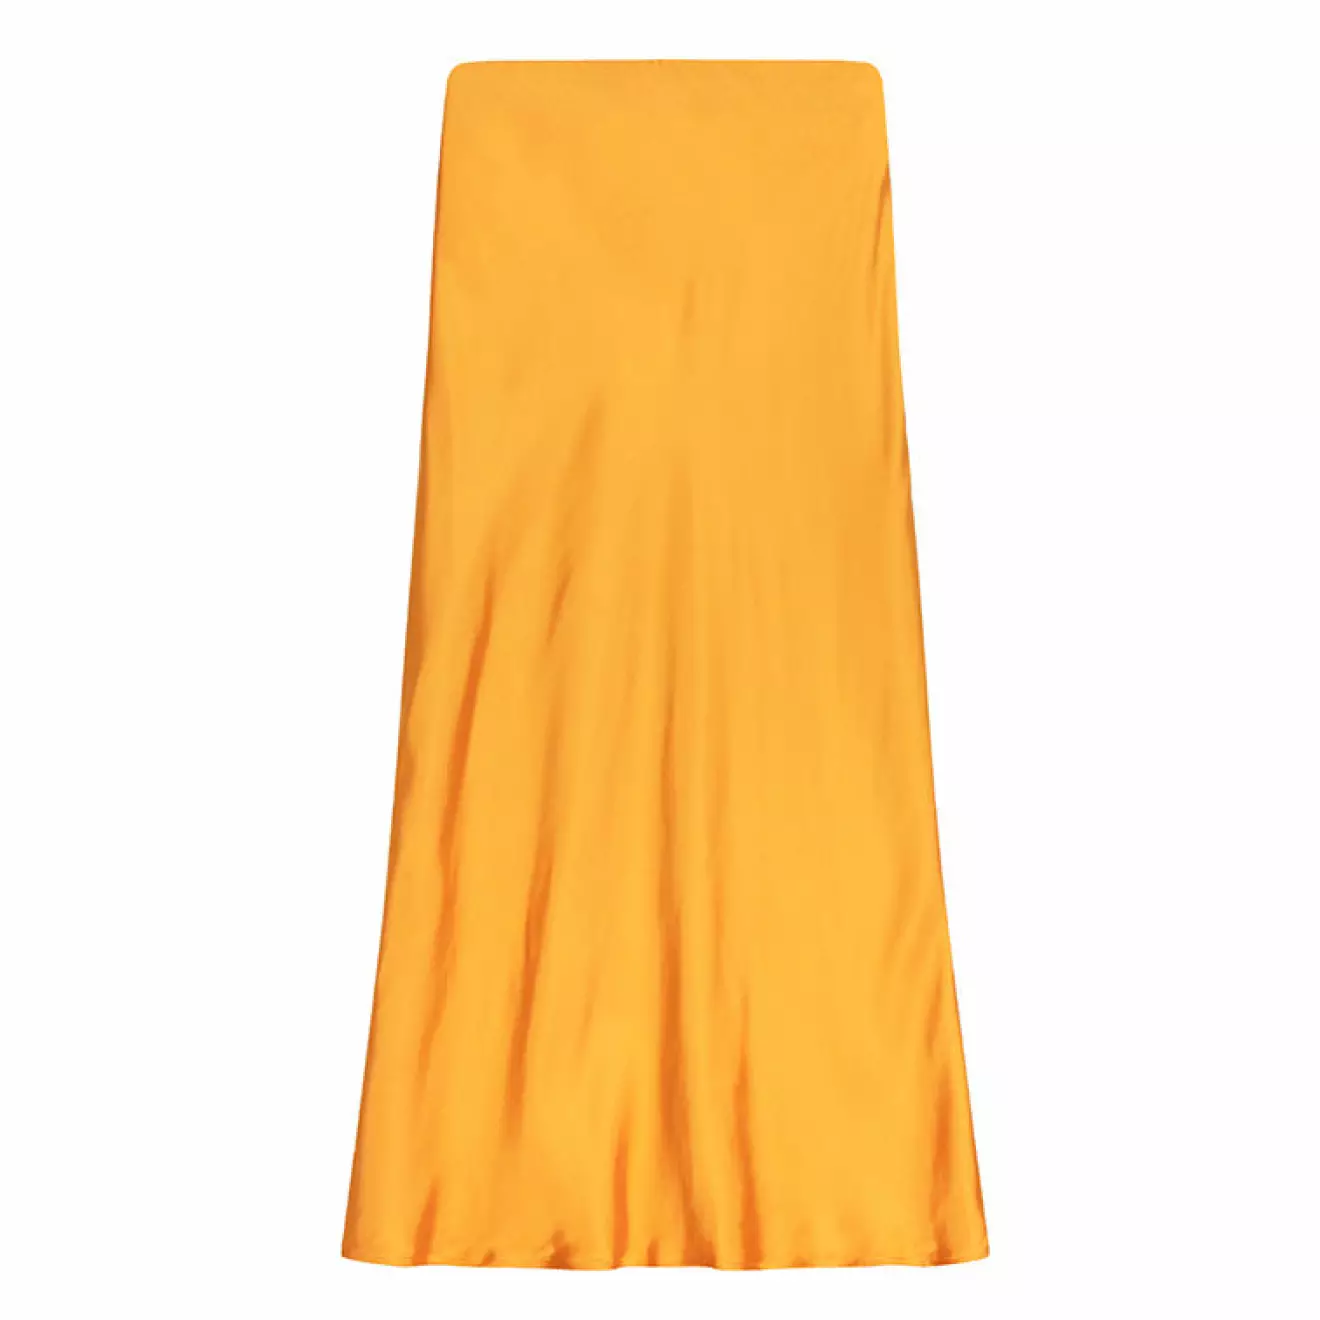 By Malina höst 2021 – gul kjol